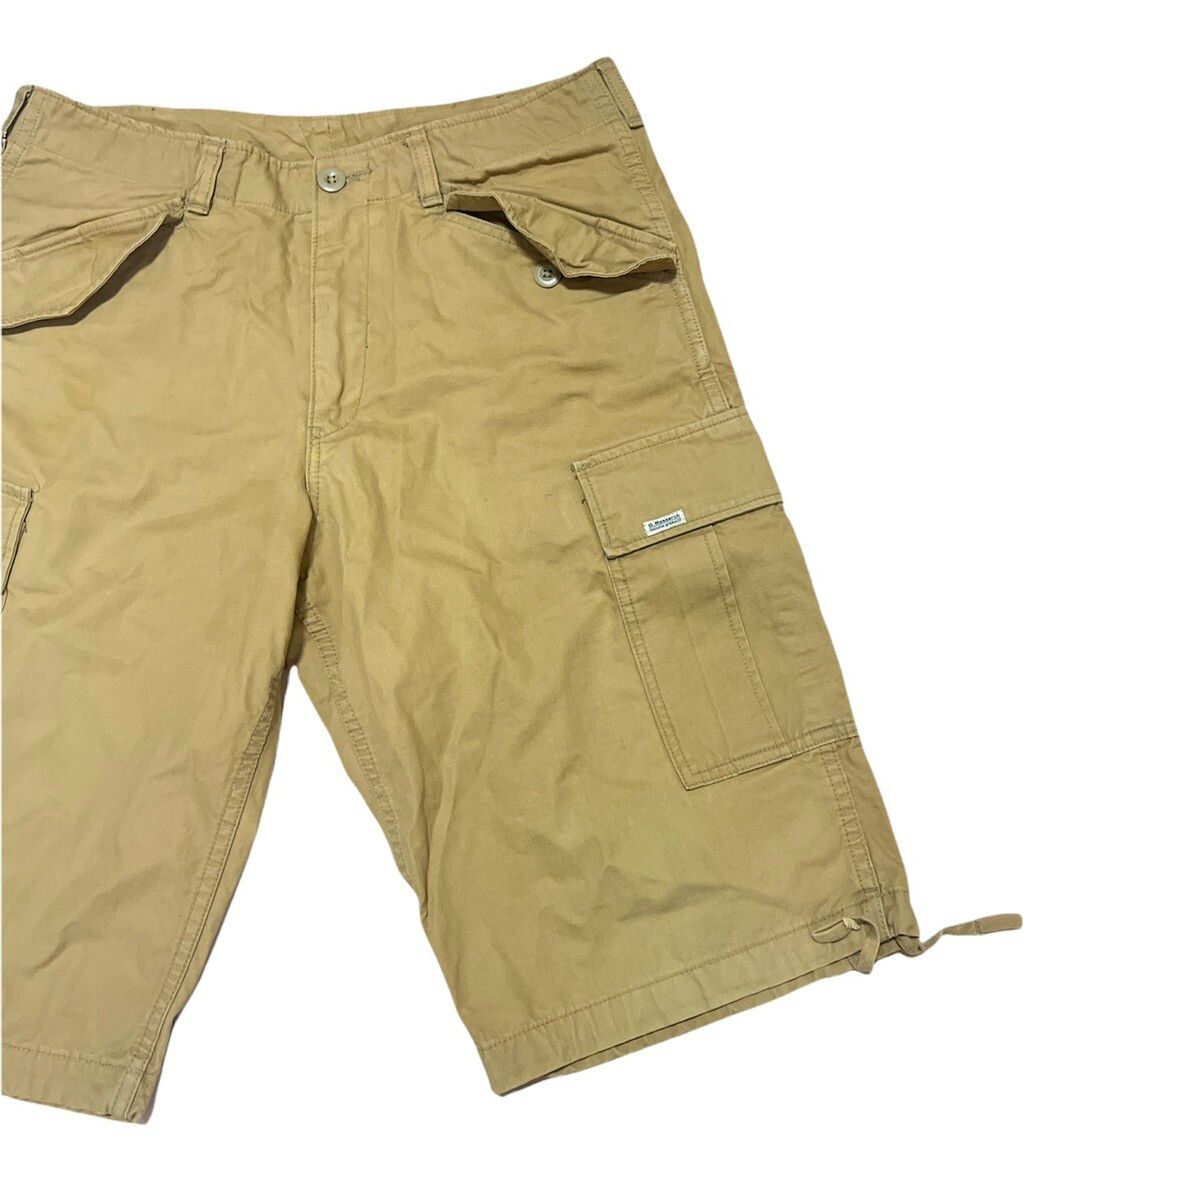 2003 General Research Cargo Short Pants - 2